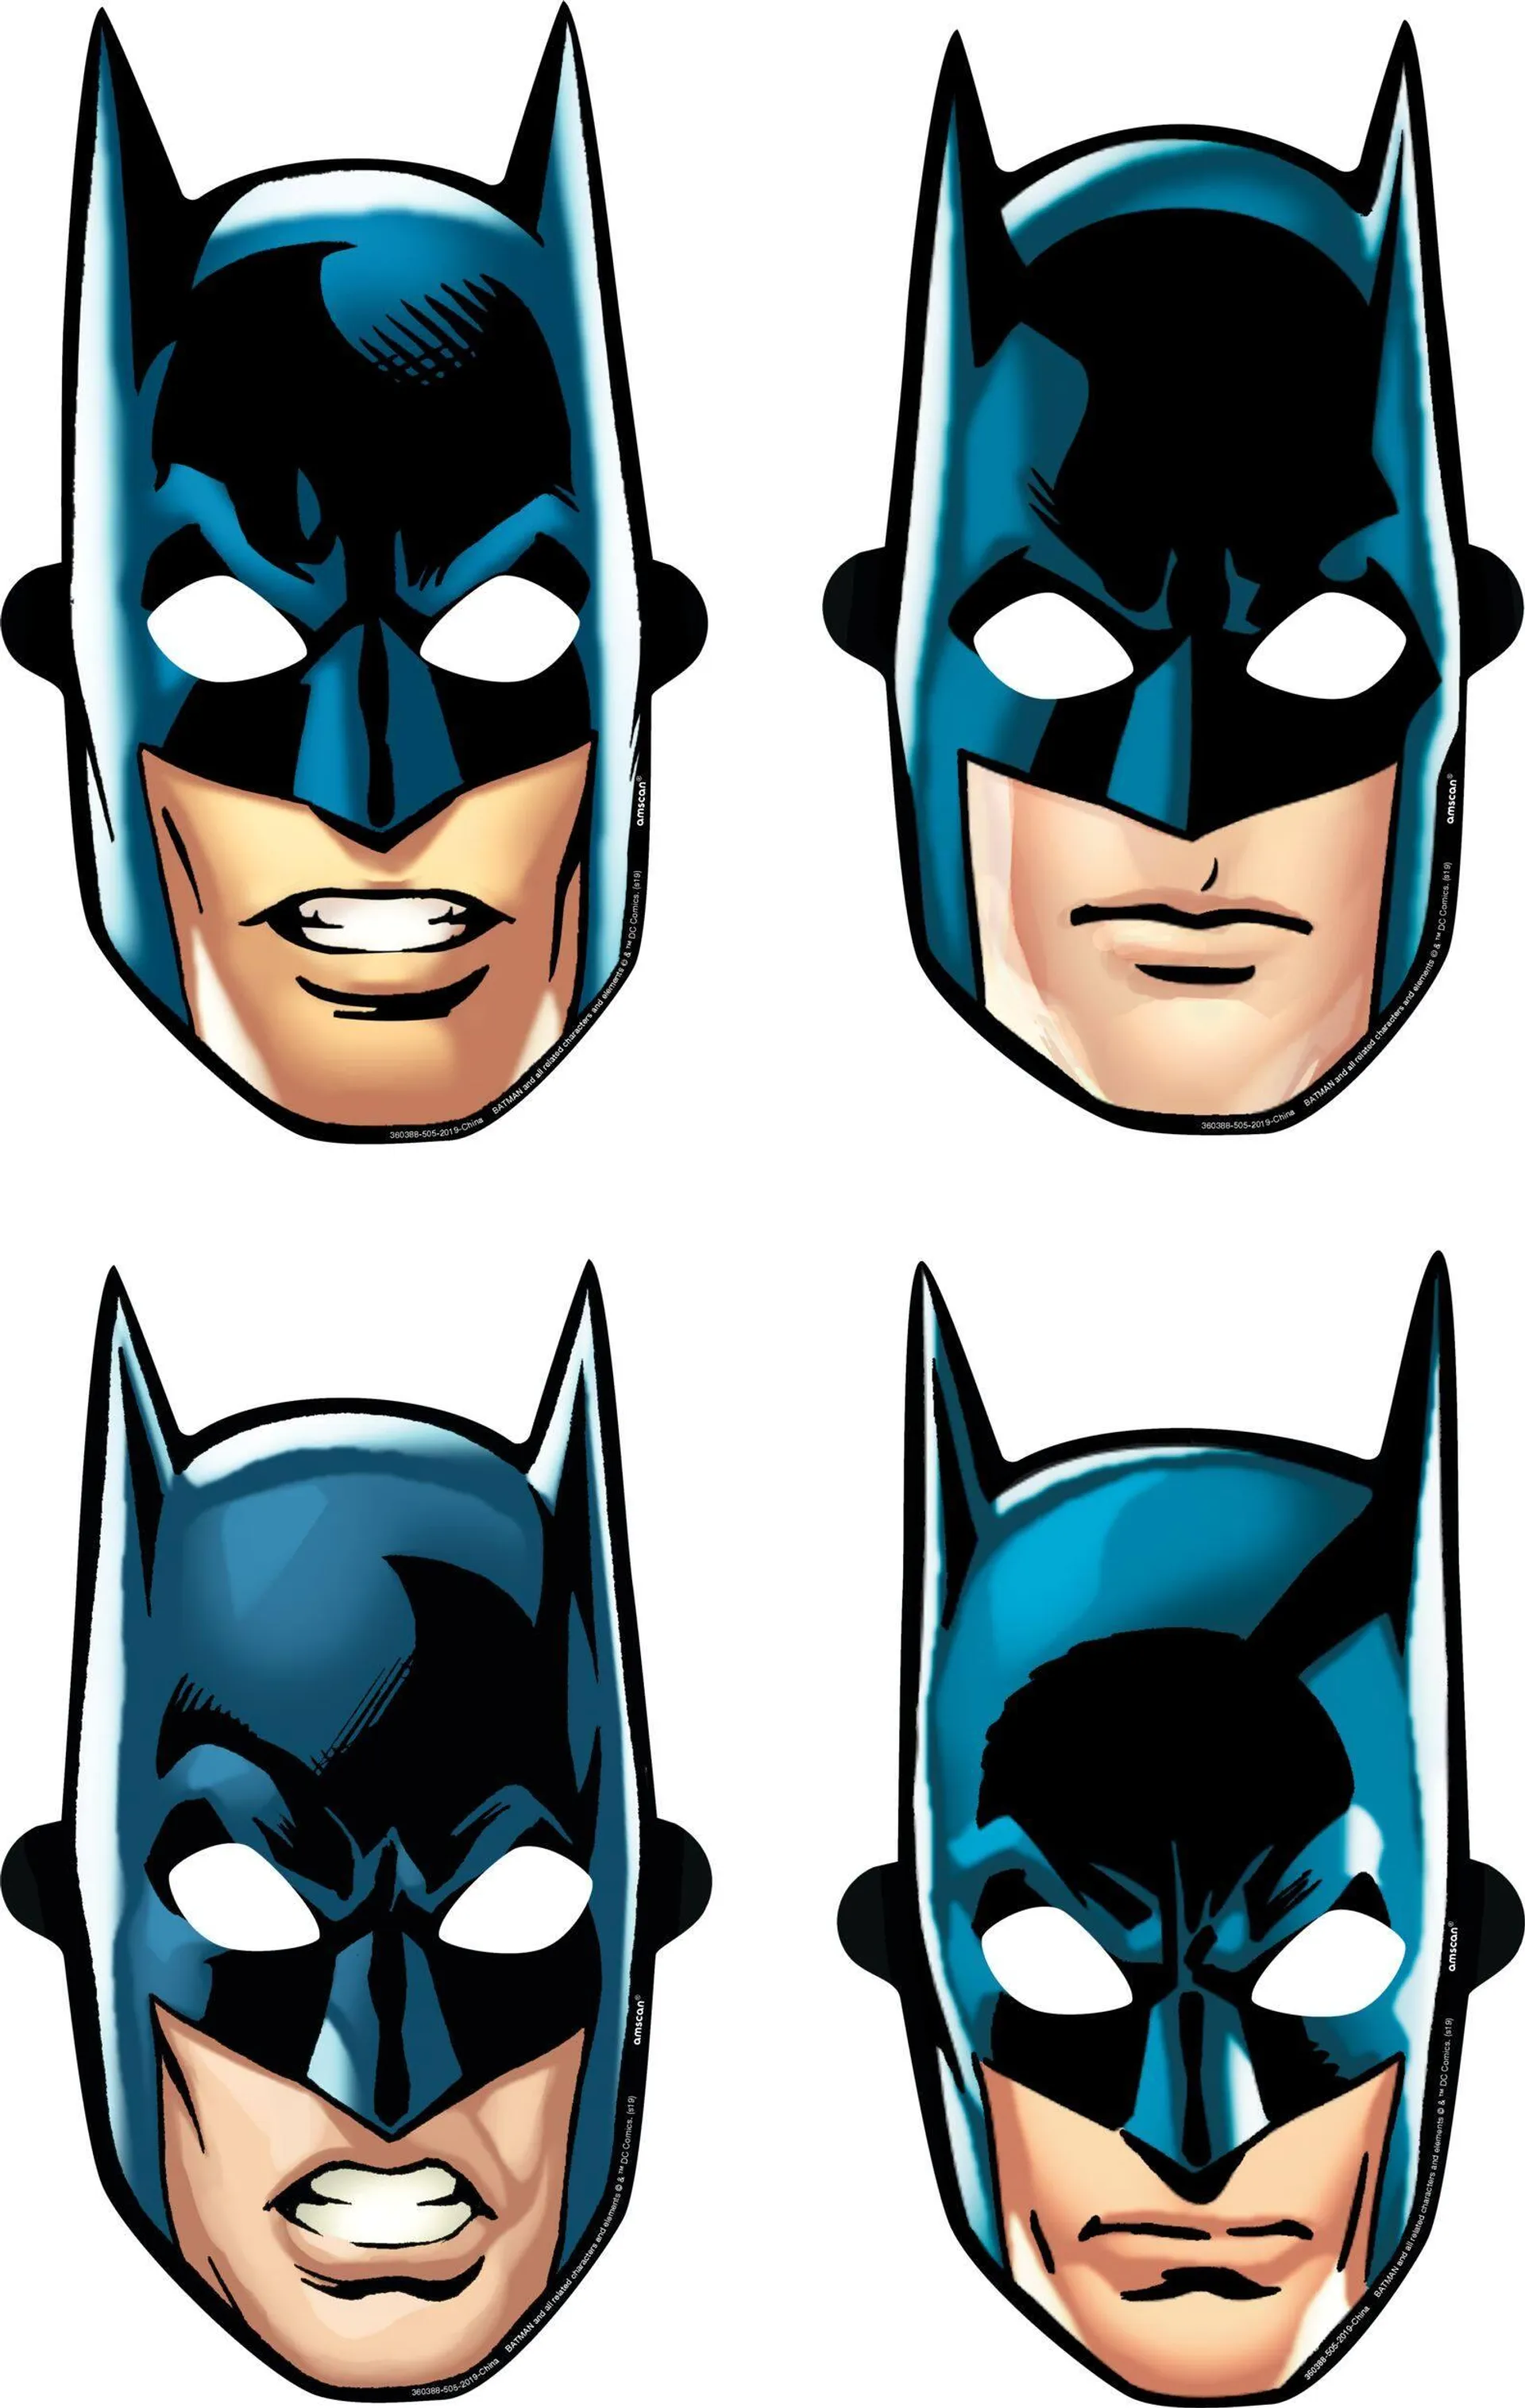 DC Justice League Batman Paper Masks, Blue/Black, One Size, 8-pk, Wearable Costume Accessories for Birthdays/Halloween